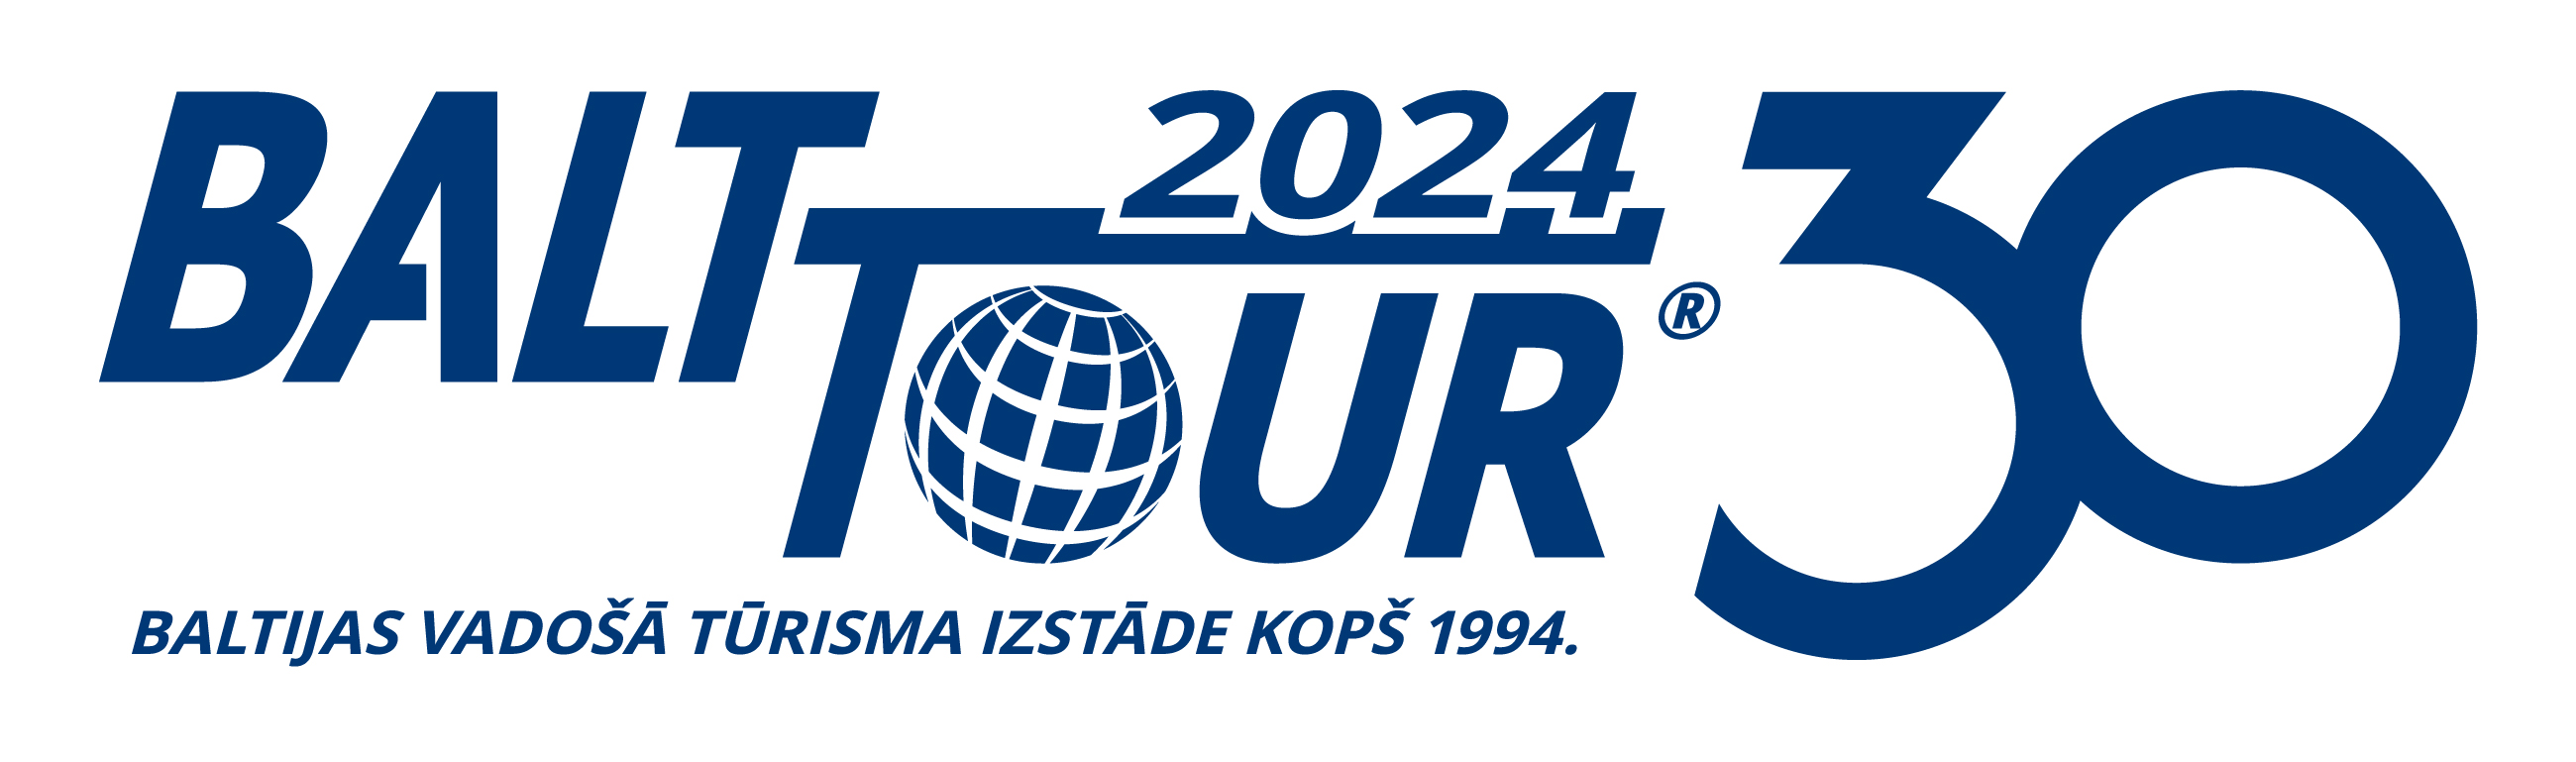 Logo - Balttour 2024 (CMYK)